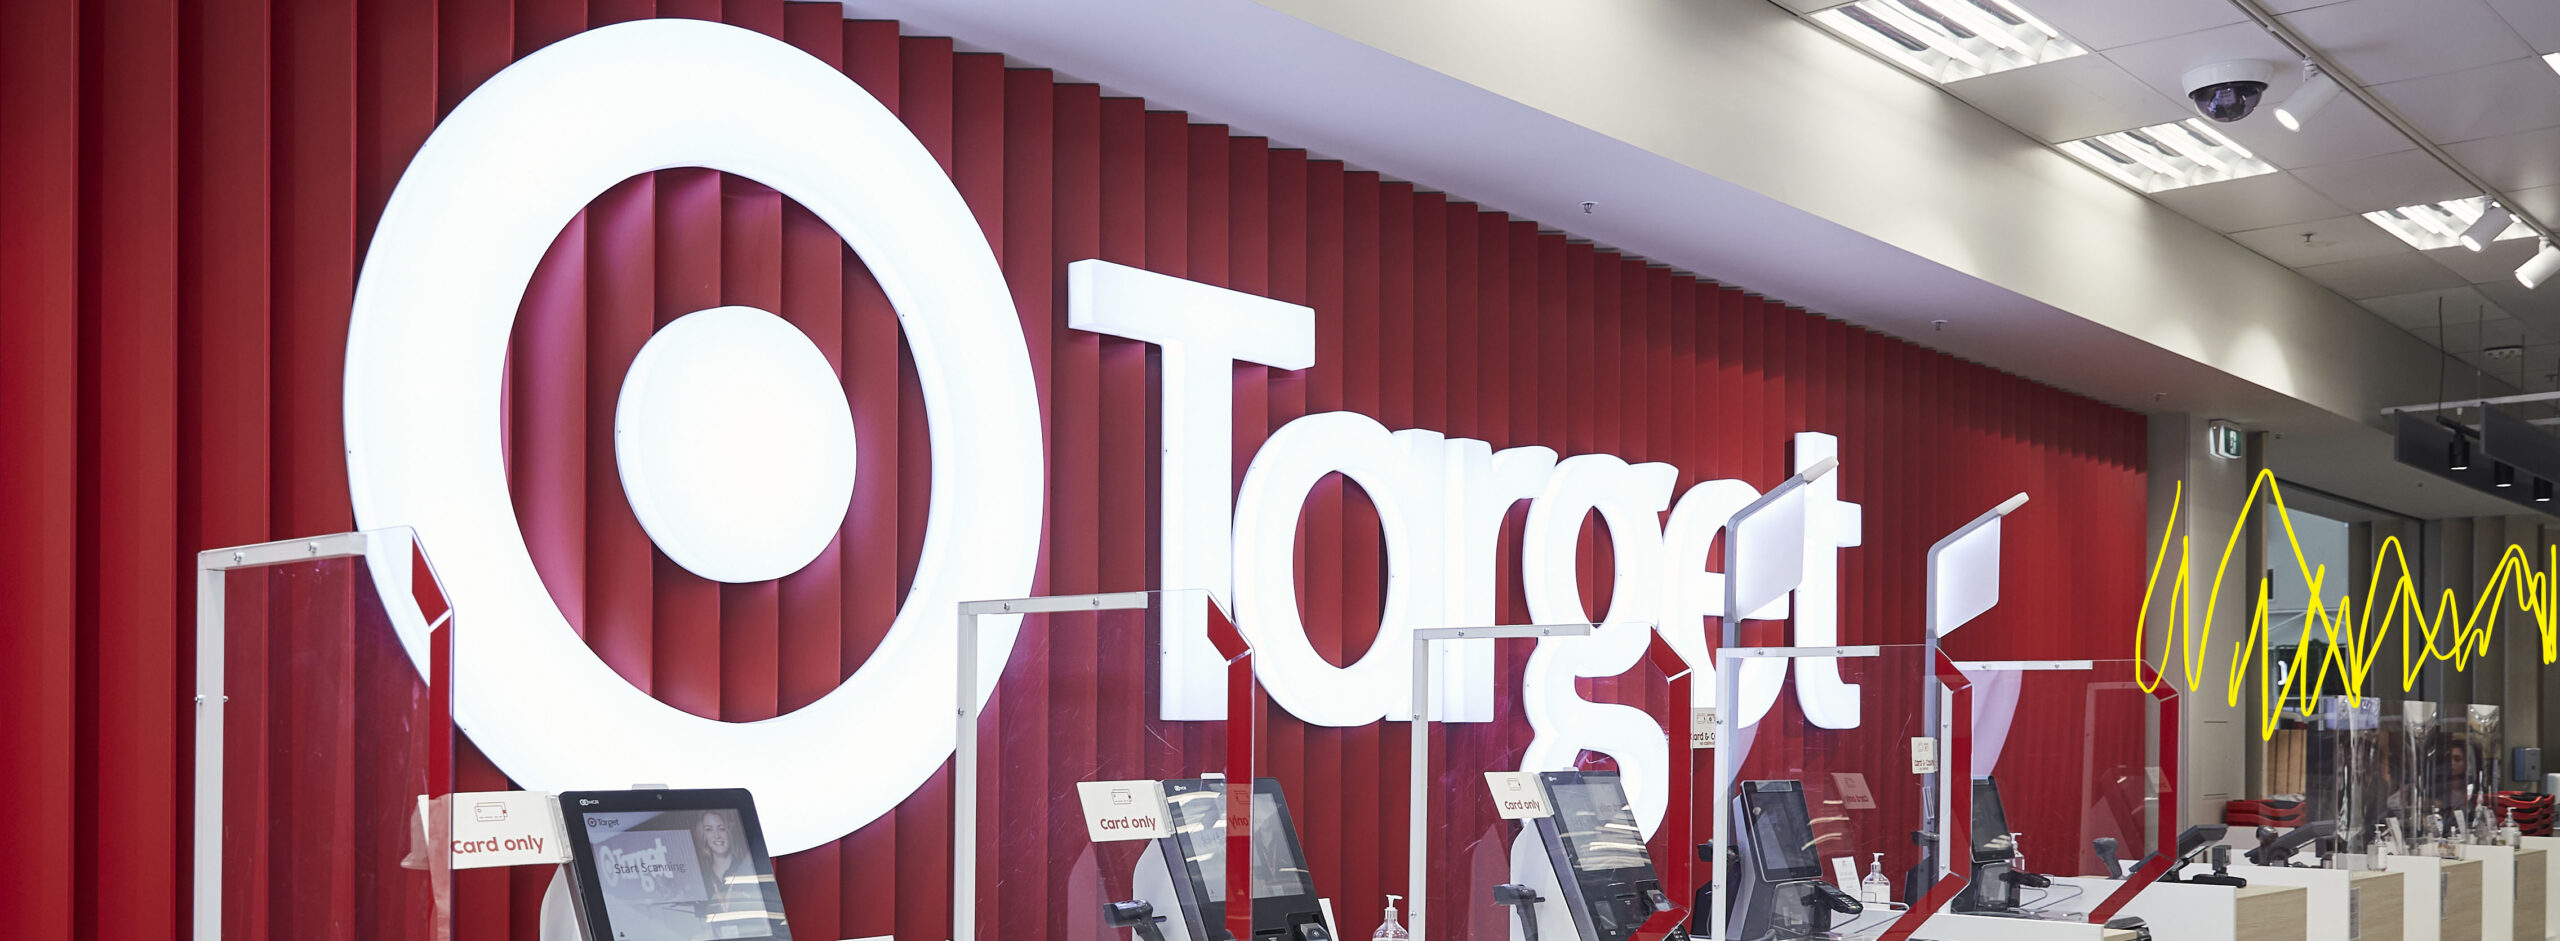 Retail giant Target selects daVinci Assortment Planning Software